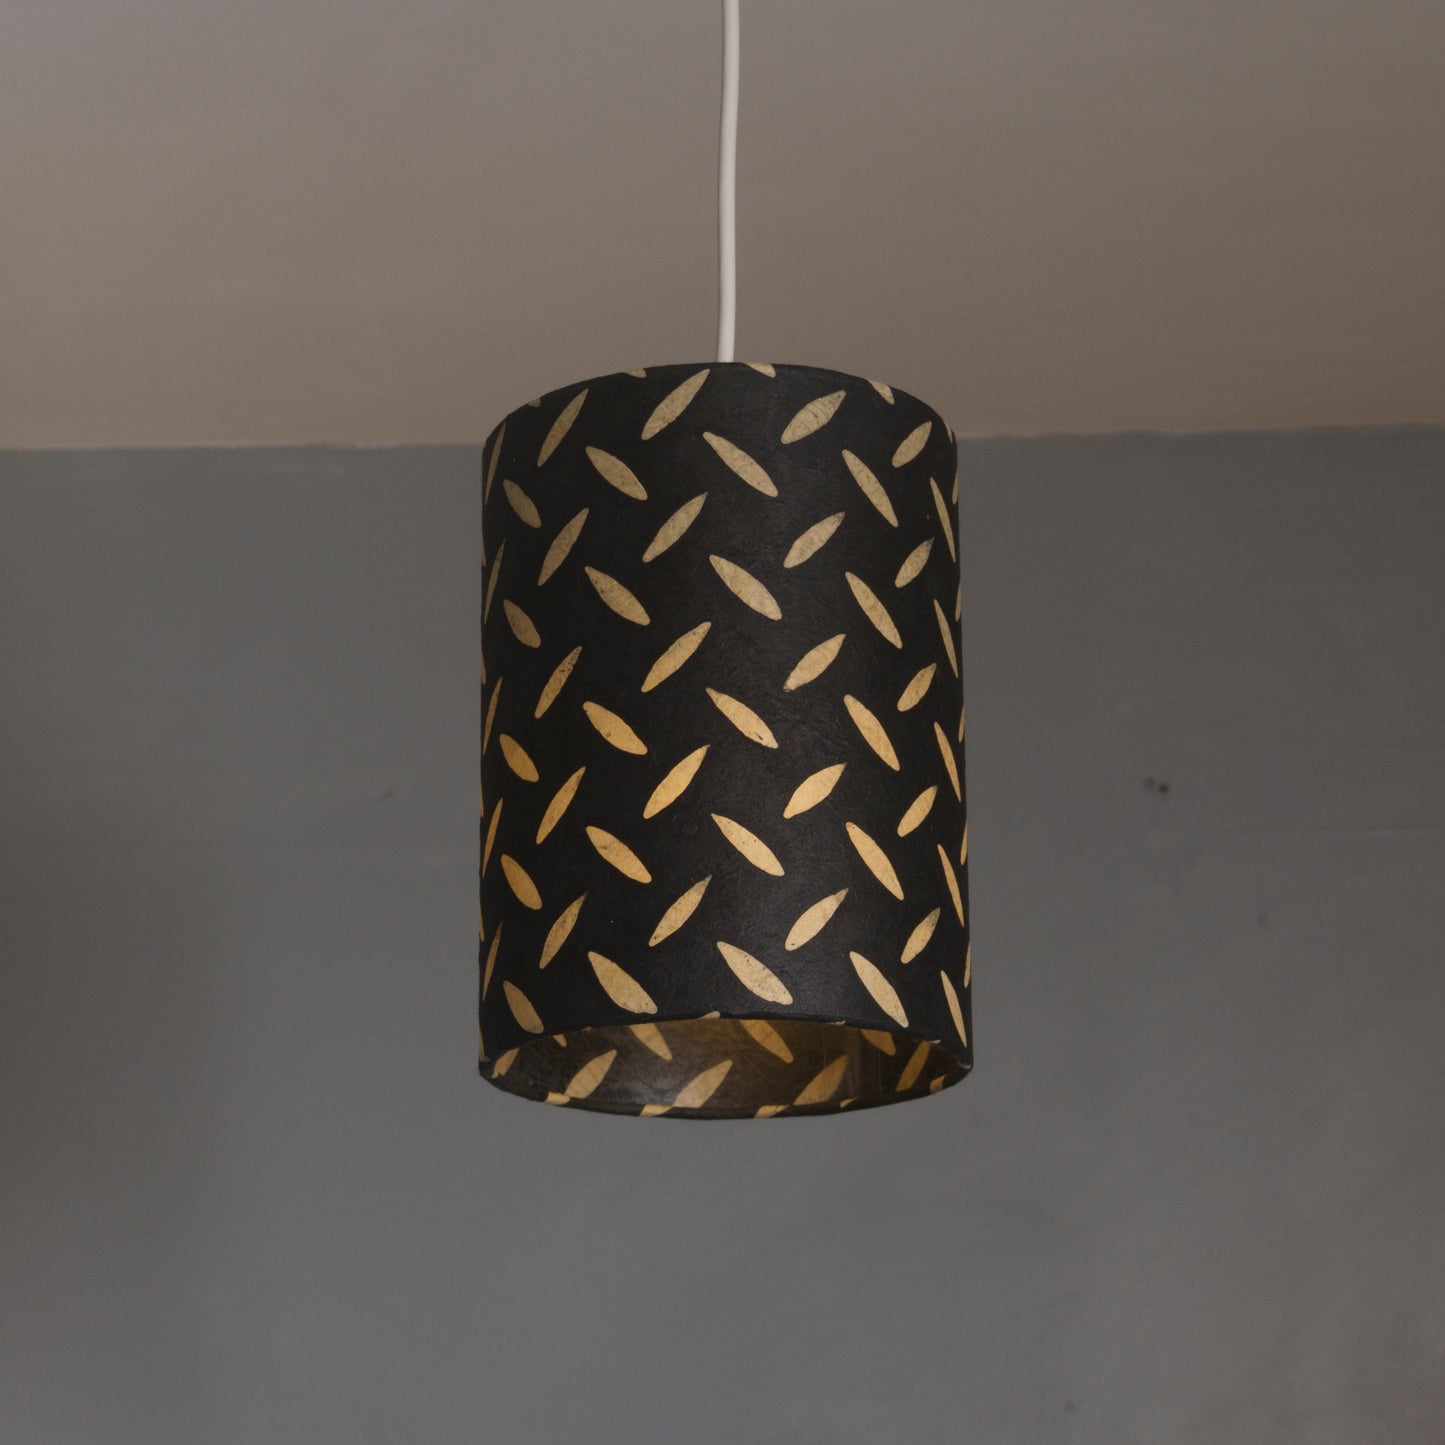 Conical Lamp Shade P11 - Batik Tread Plate Black, 23cm(top) x 35cm(bottom) x 31cm(height)